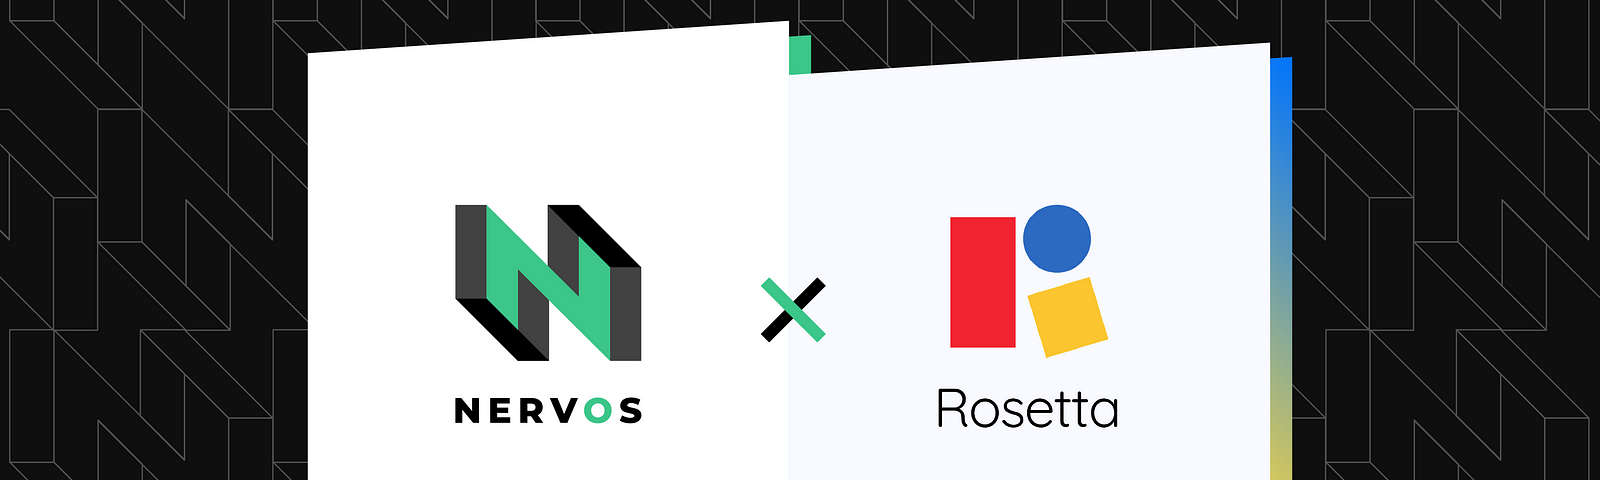 Nervos logo and Rosetta logo